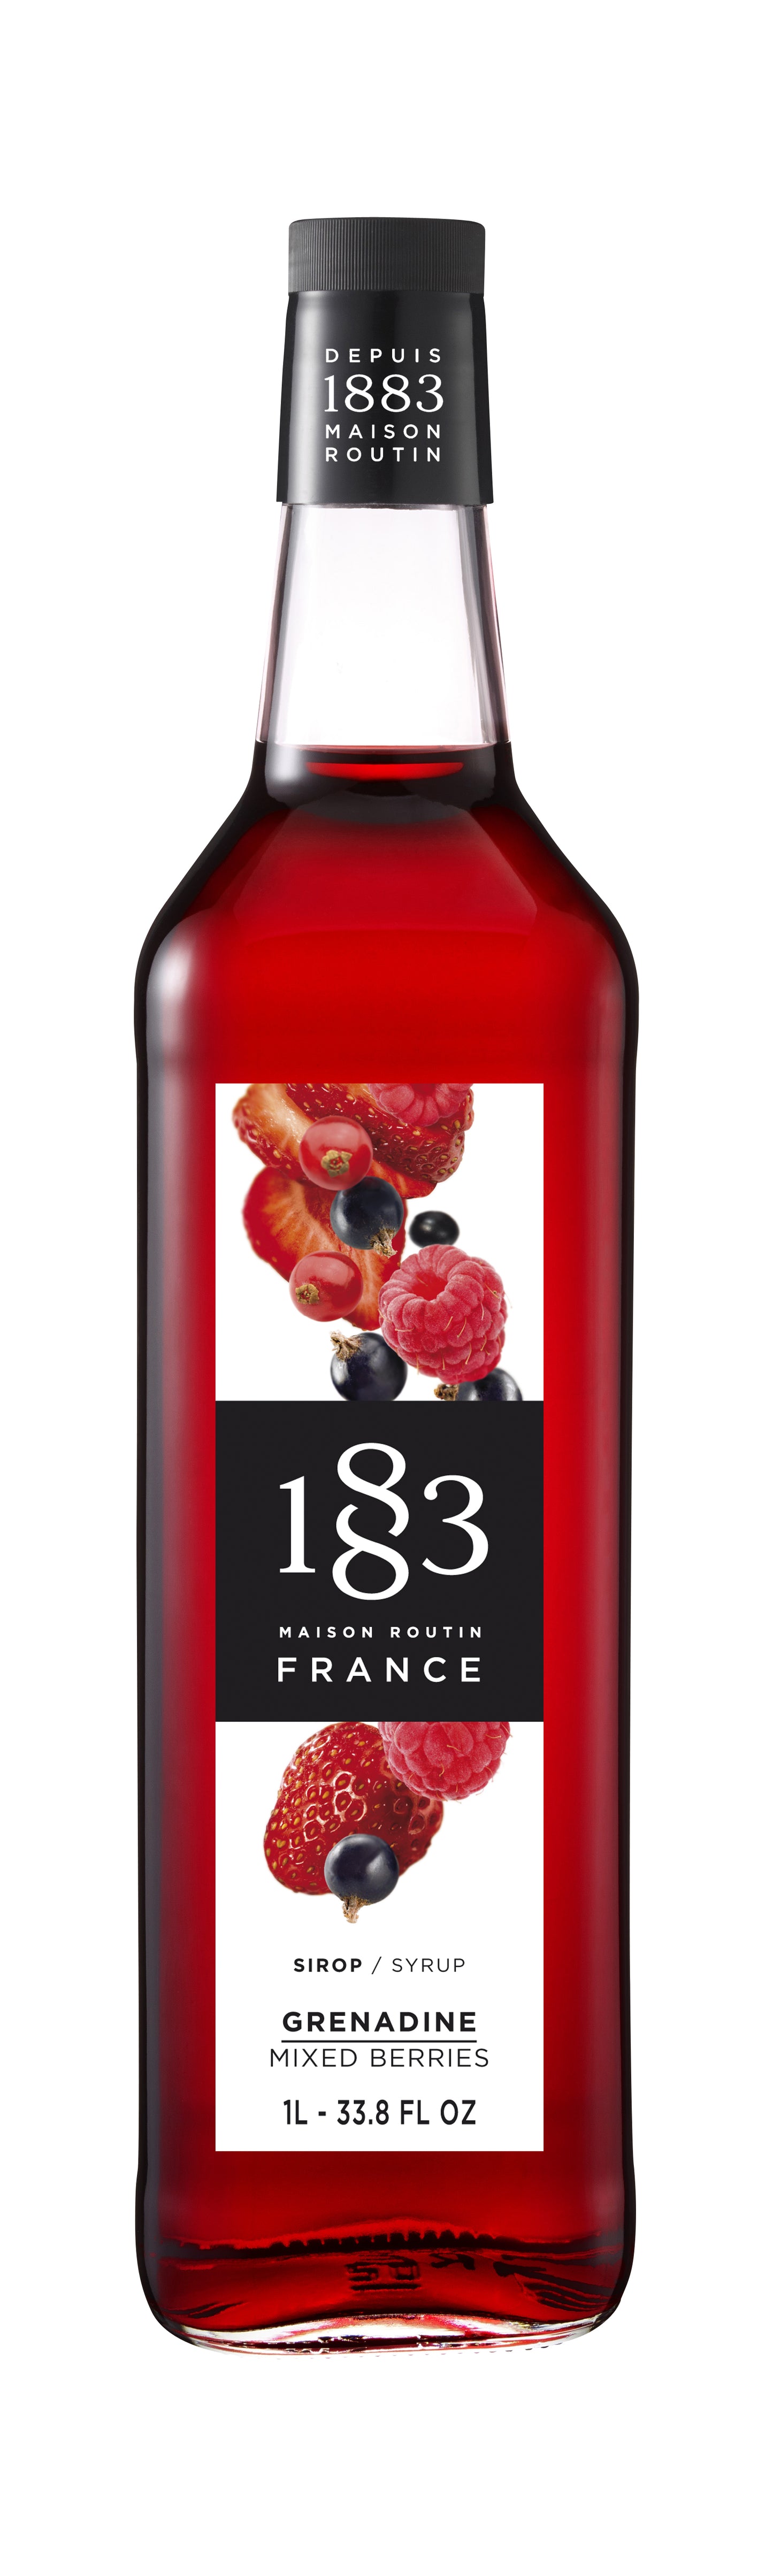 1883 Maison Routin - Mixed Berries 1 L